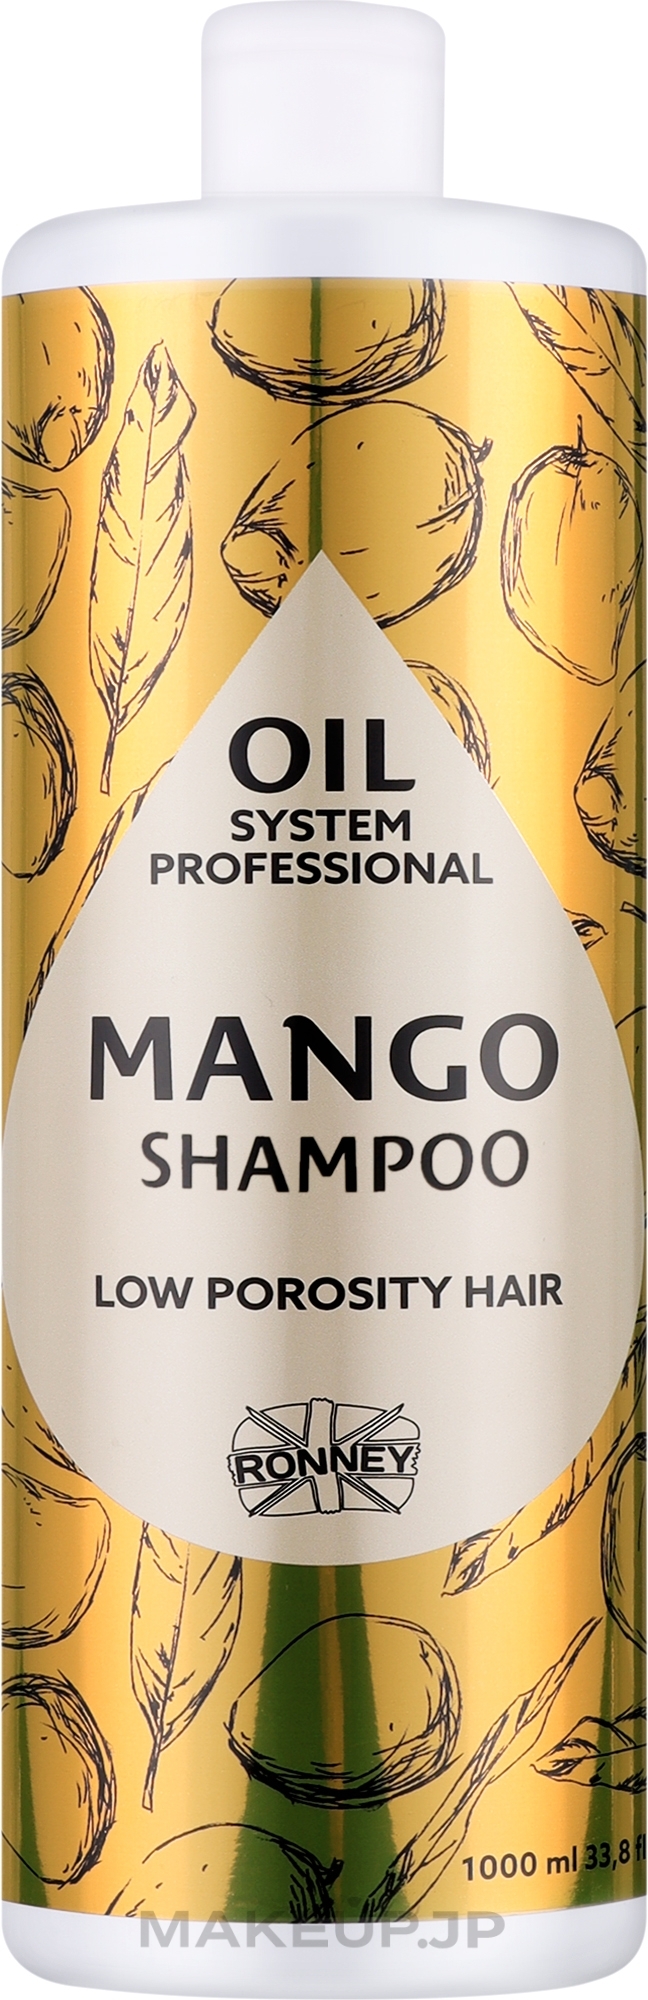 Mango Oil Shampoo for Low Porous Hair - Ronney Professional Oil System Low Porosity Hair Mango Shampoo	 — photo 1000 ml